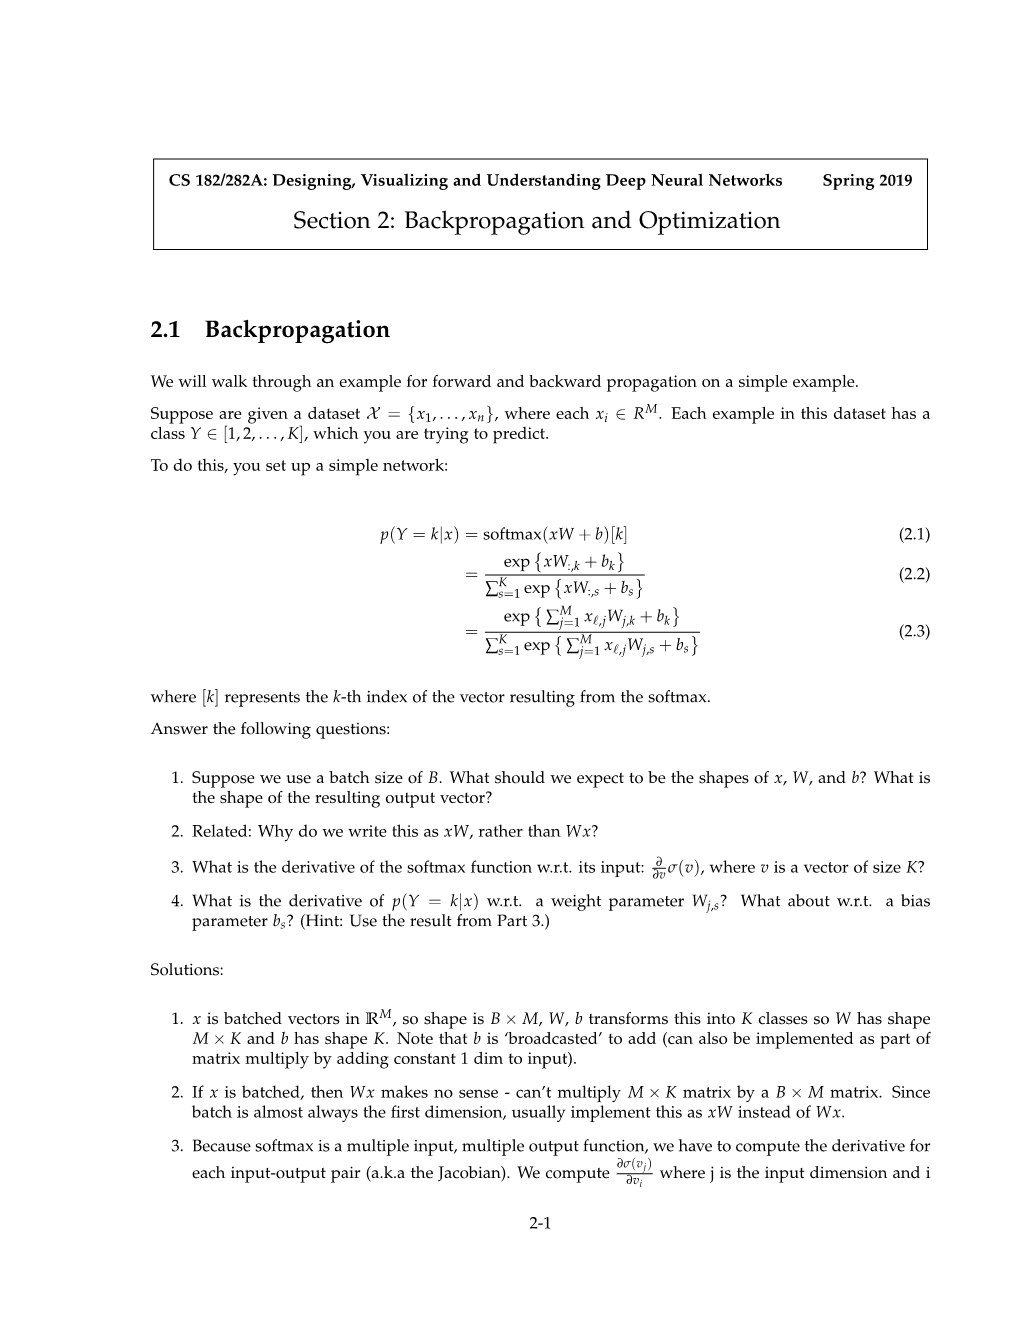 Section 2: Backpropagation and Optimization 2.1 Backpropagation